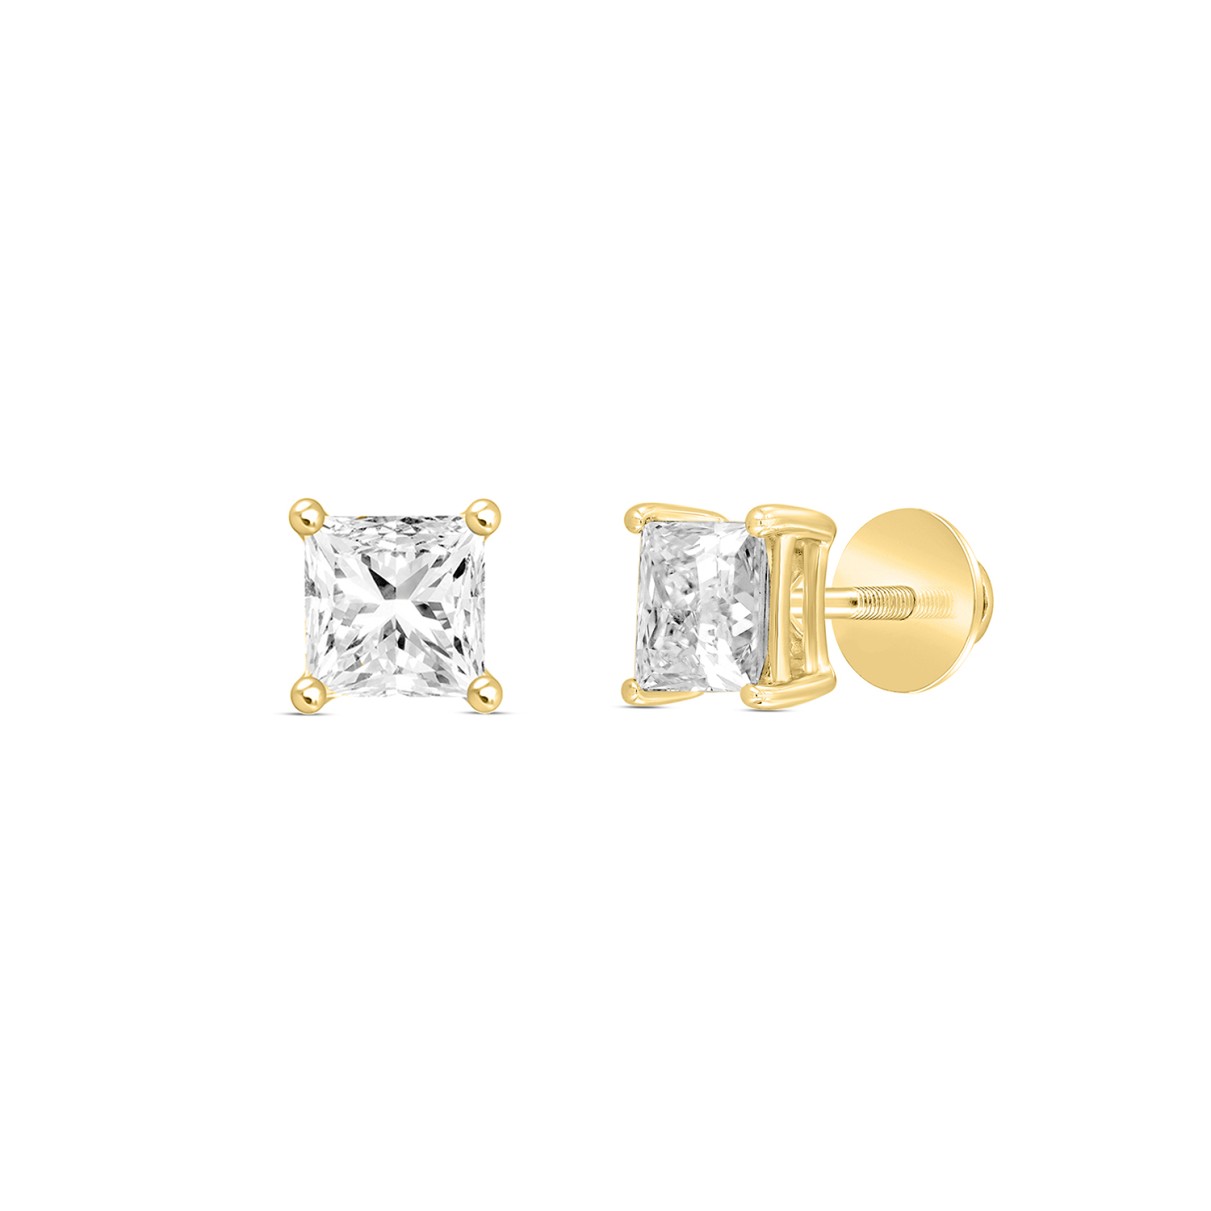 LADIES SOLITAIRE EARRINGS 2 1/2CT PRINCESS DIAMOND 14K YELLOW GOLD 